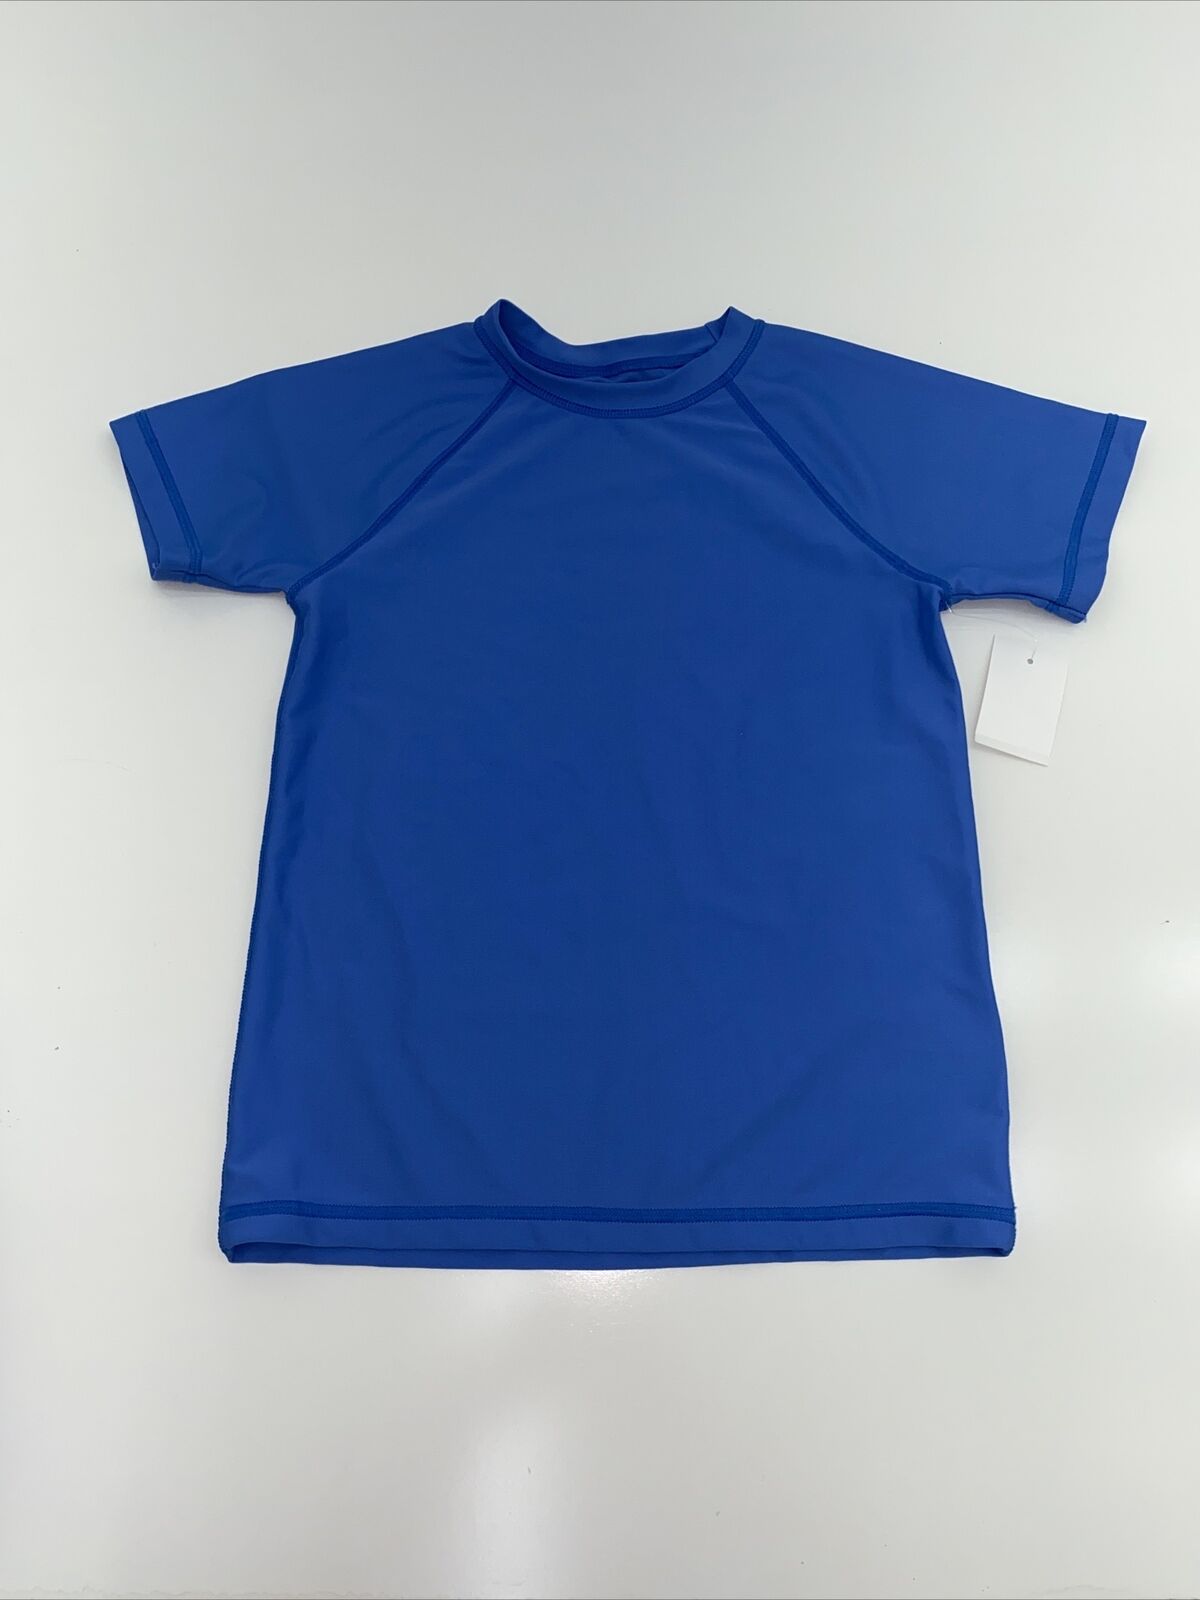 Crewcuts by J. Crew Blue Short Sleeve Rash Guard UPF 50+ Swim Shirt Size S New